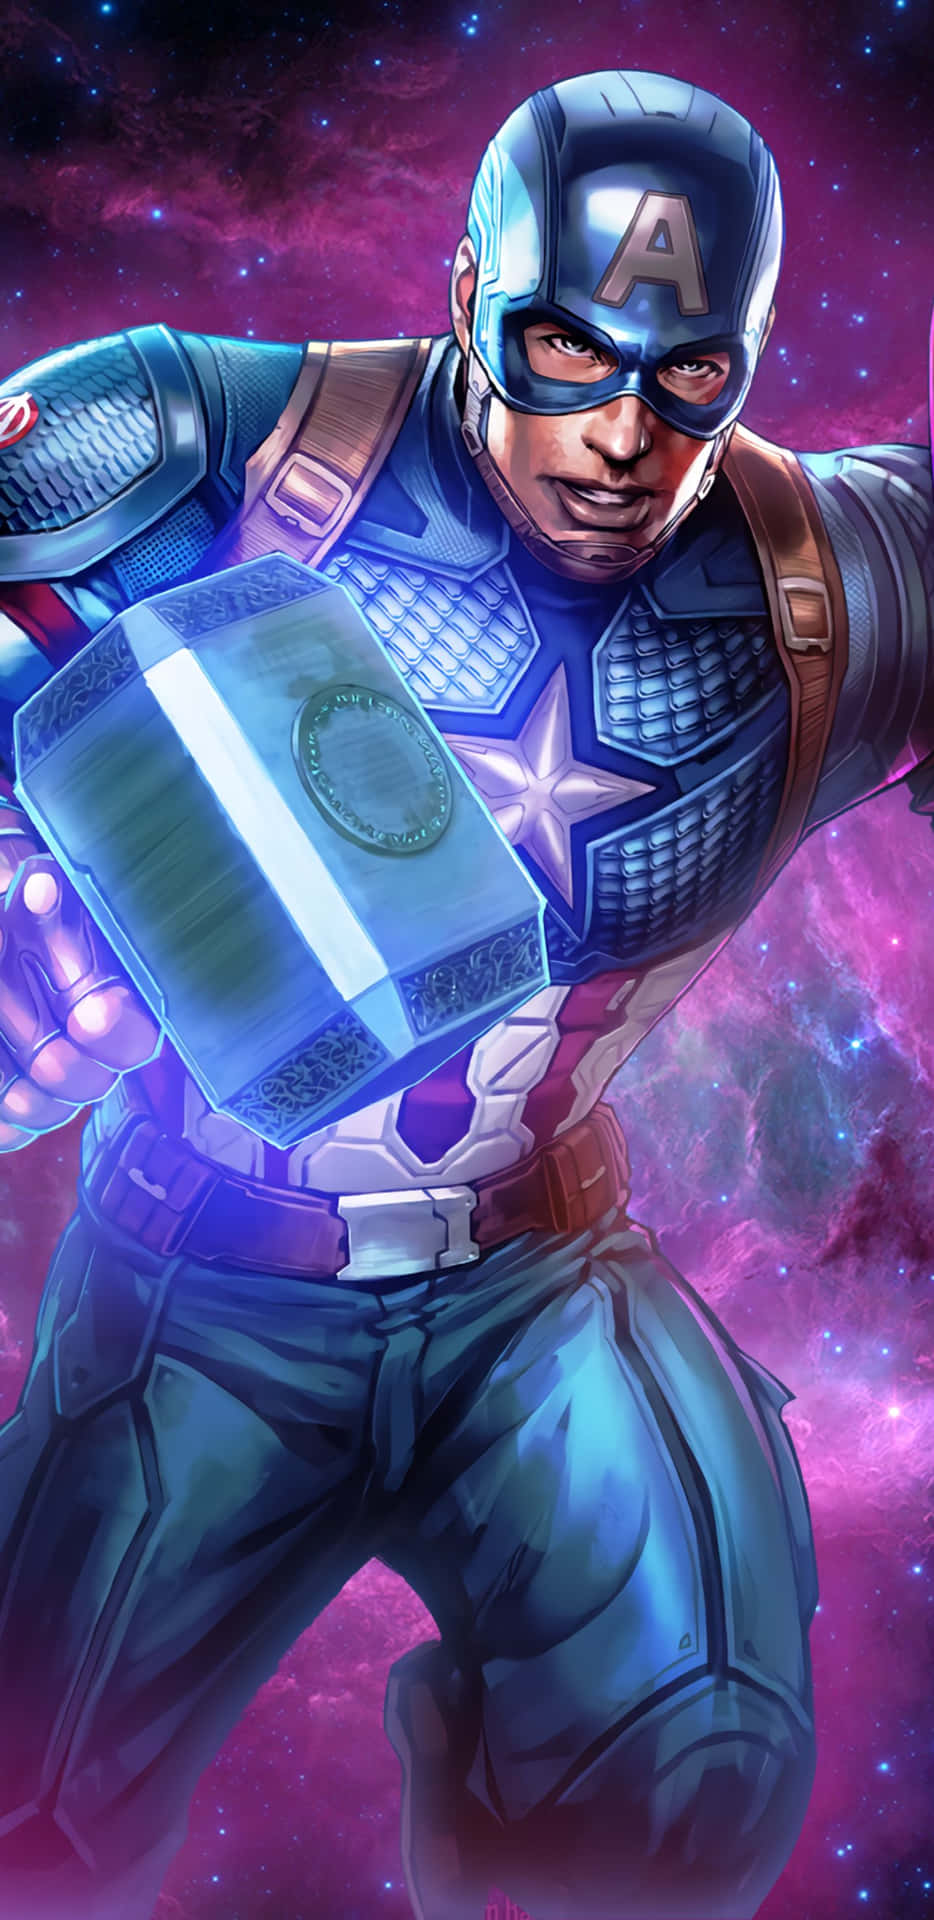 Pixel3xl Captain America Hintergrund Illustrationskunst.